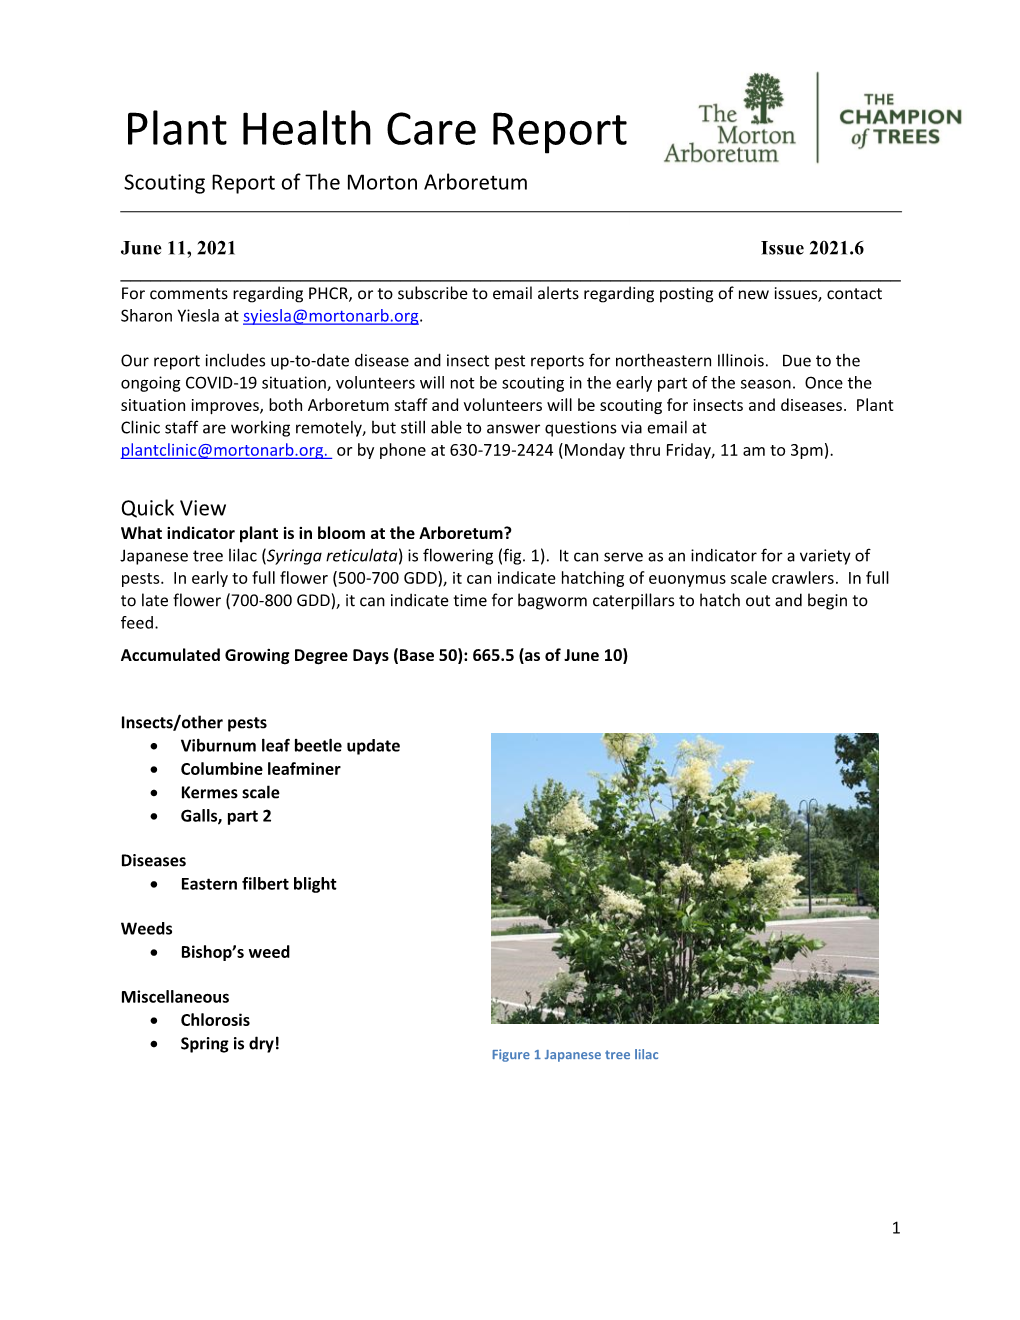 Plant Health Care Report Scouting Report of the Morton Arboretum